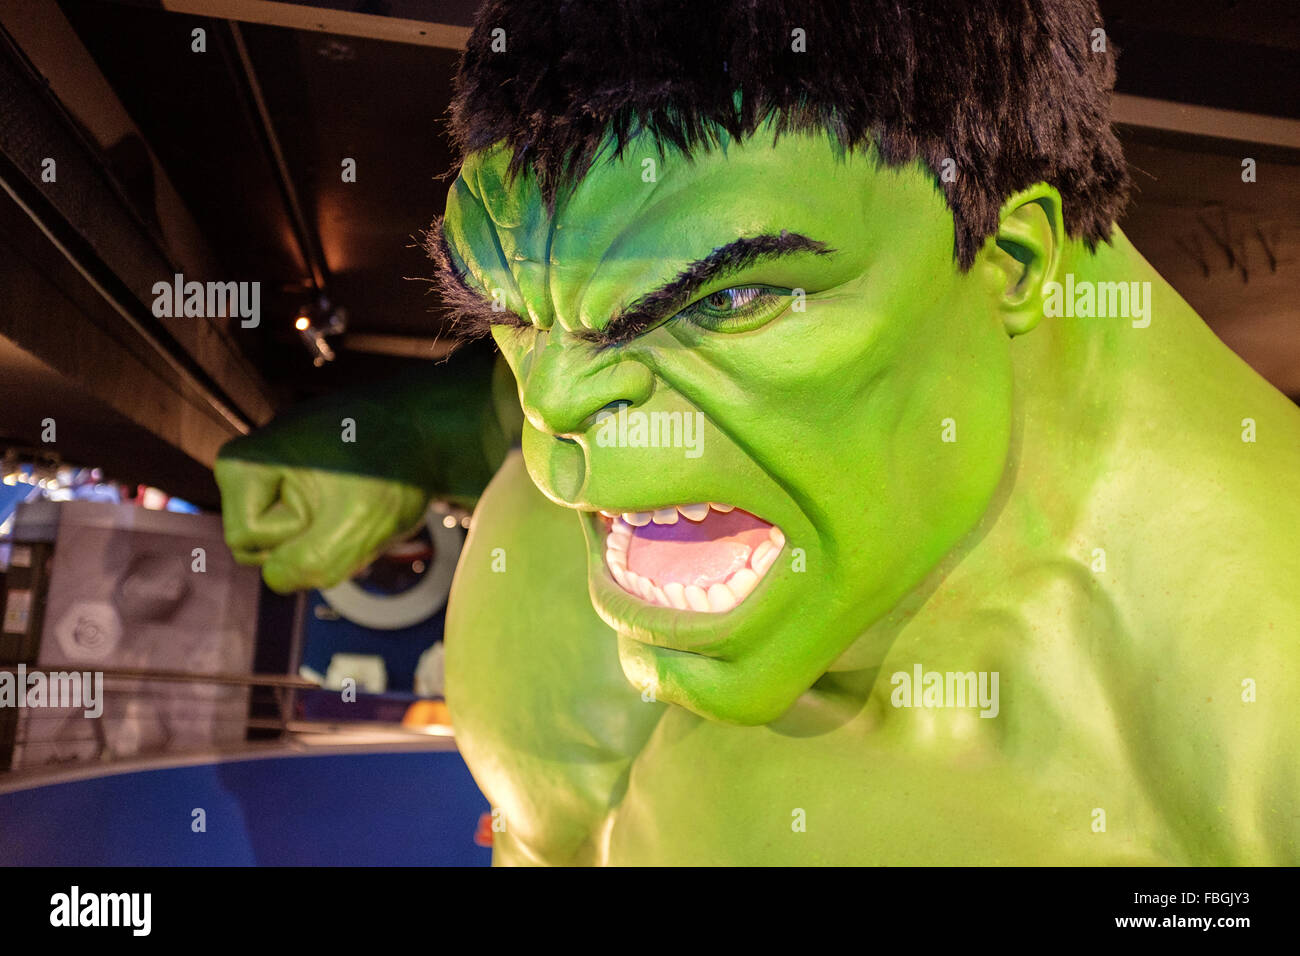 The Incredible Hulk Waxwork in Madam Tussauds, London Stock Photo